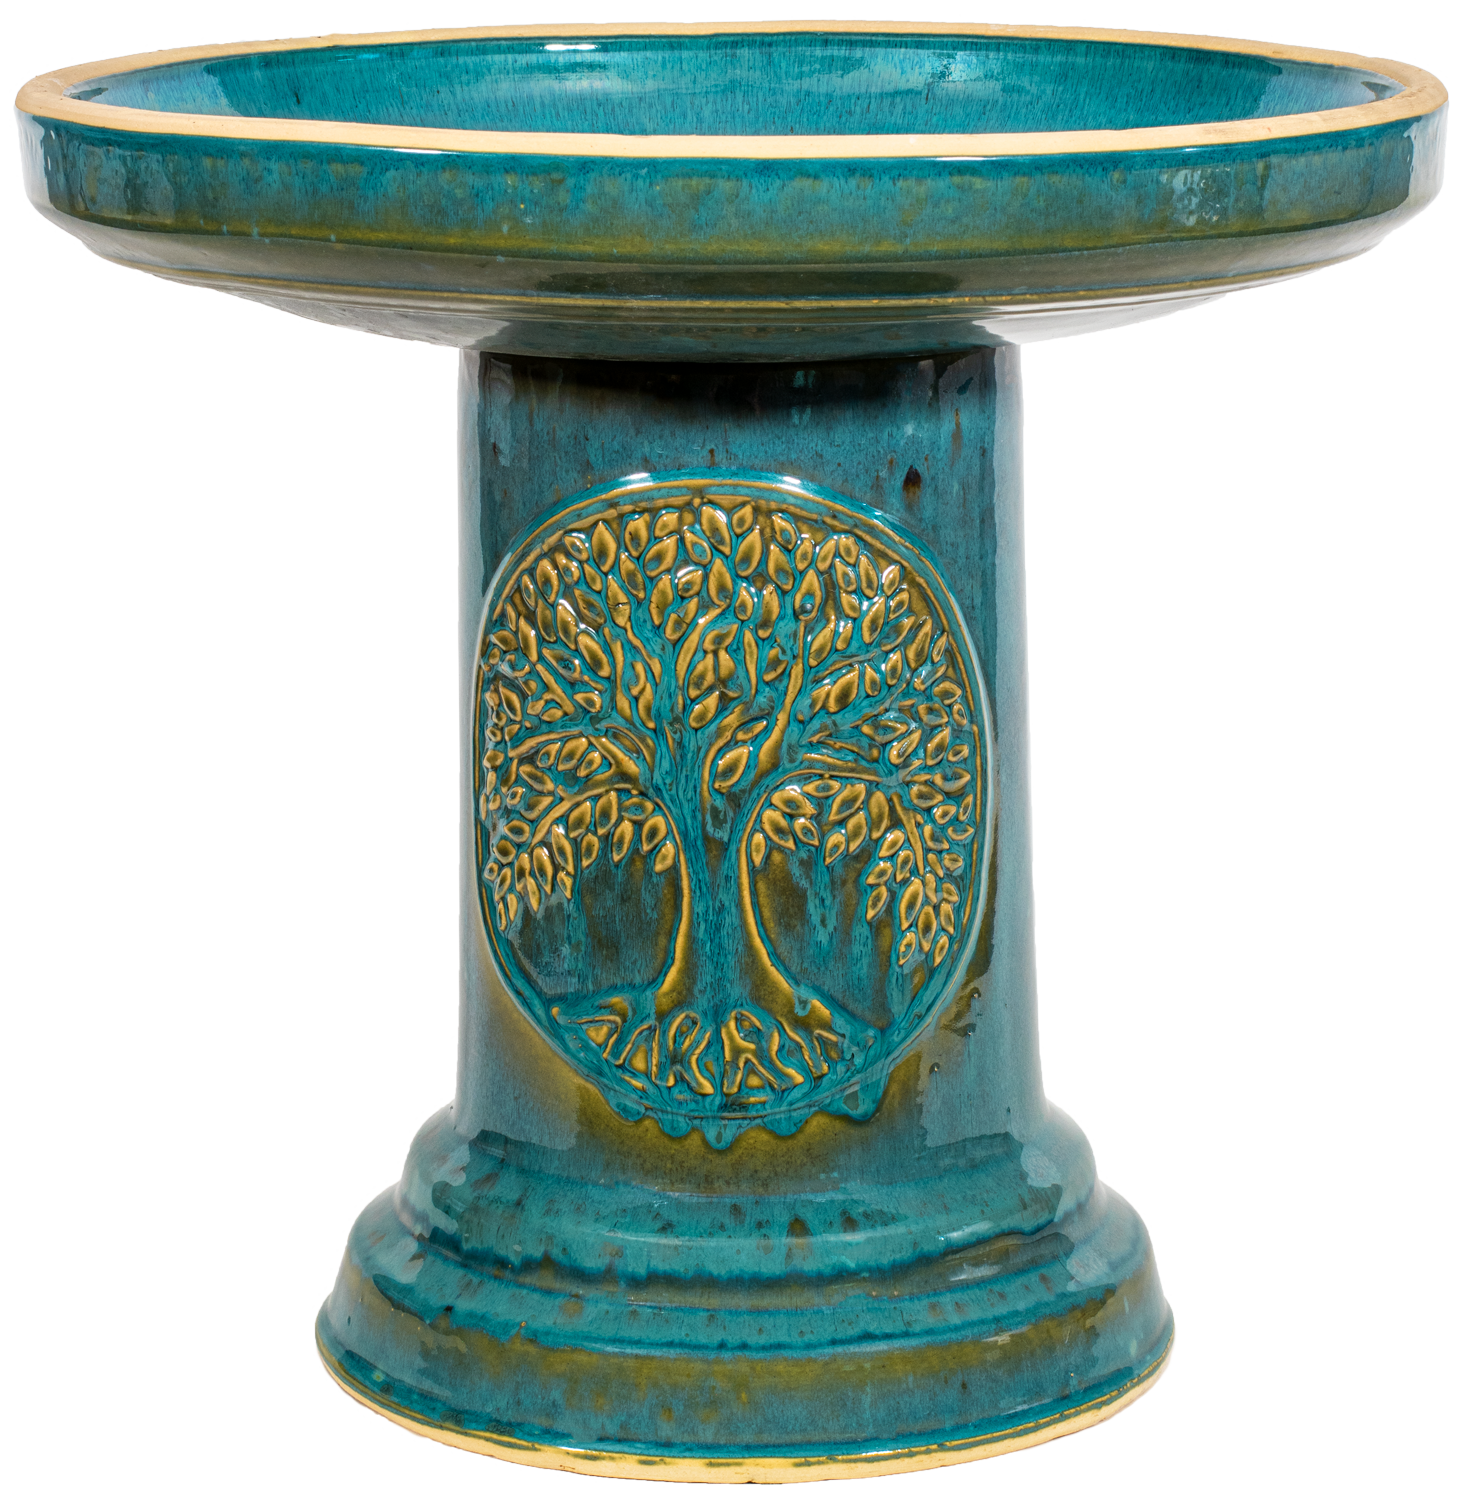 ceramic turqouise birdbath set with Tree of Life motif